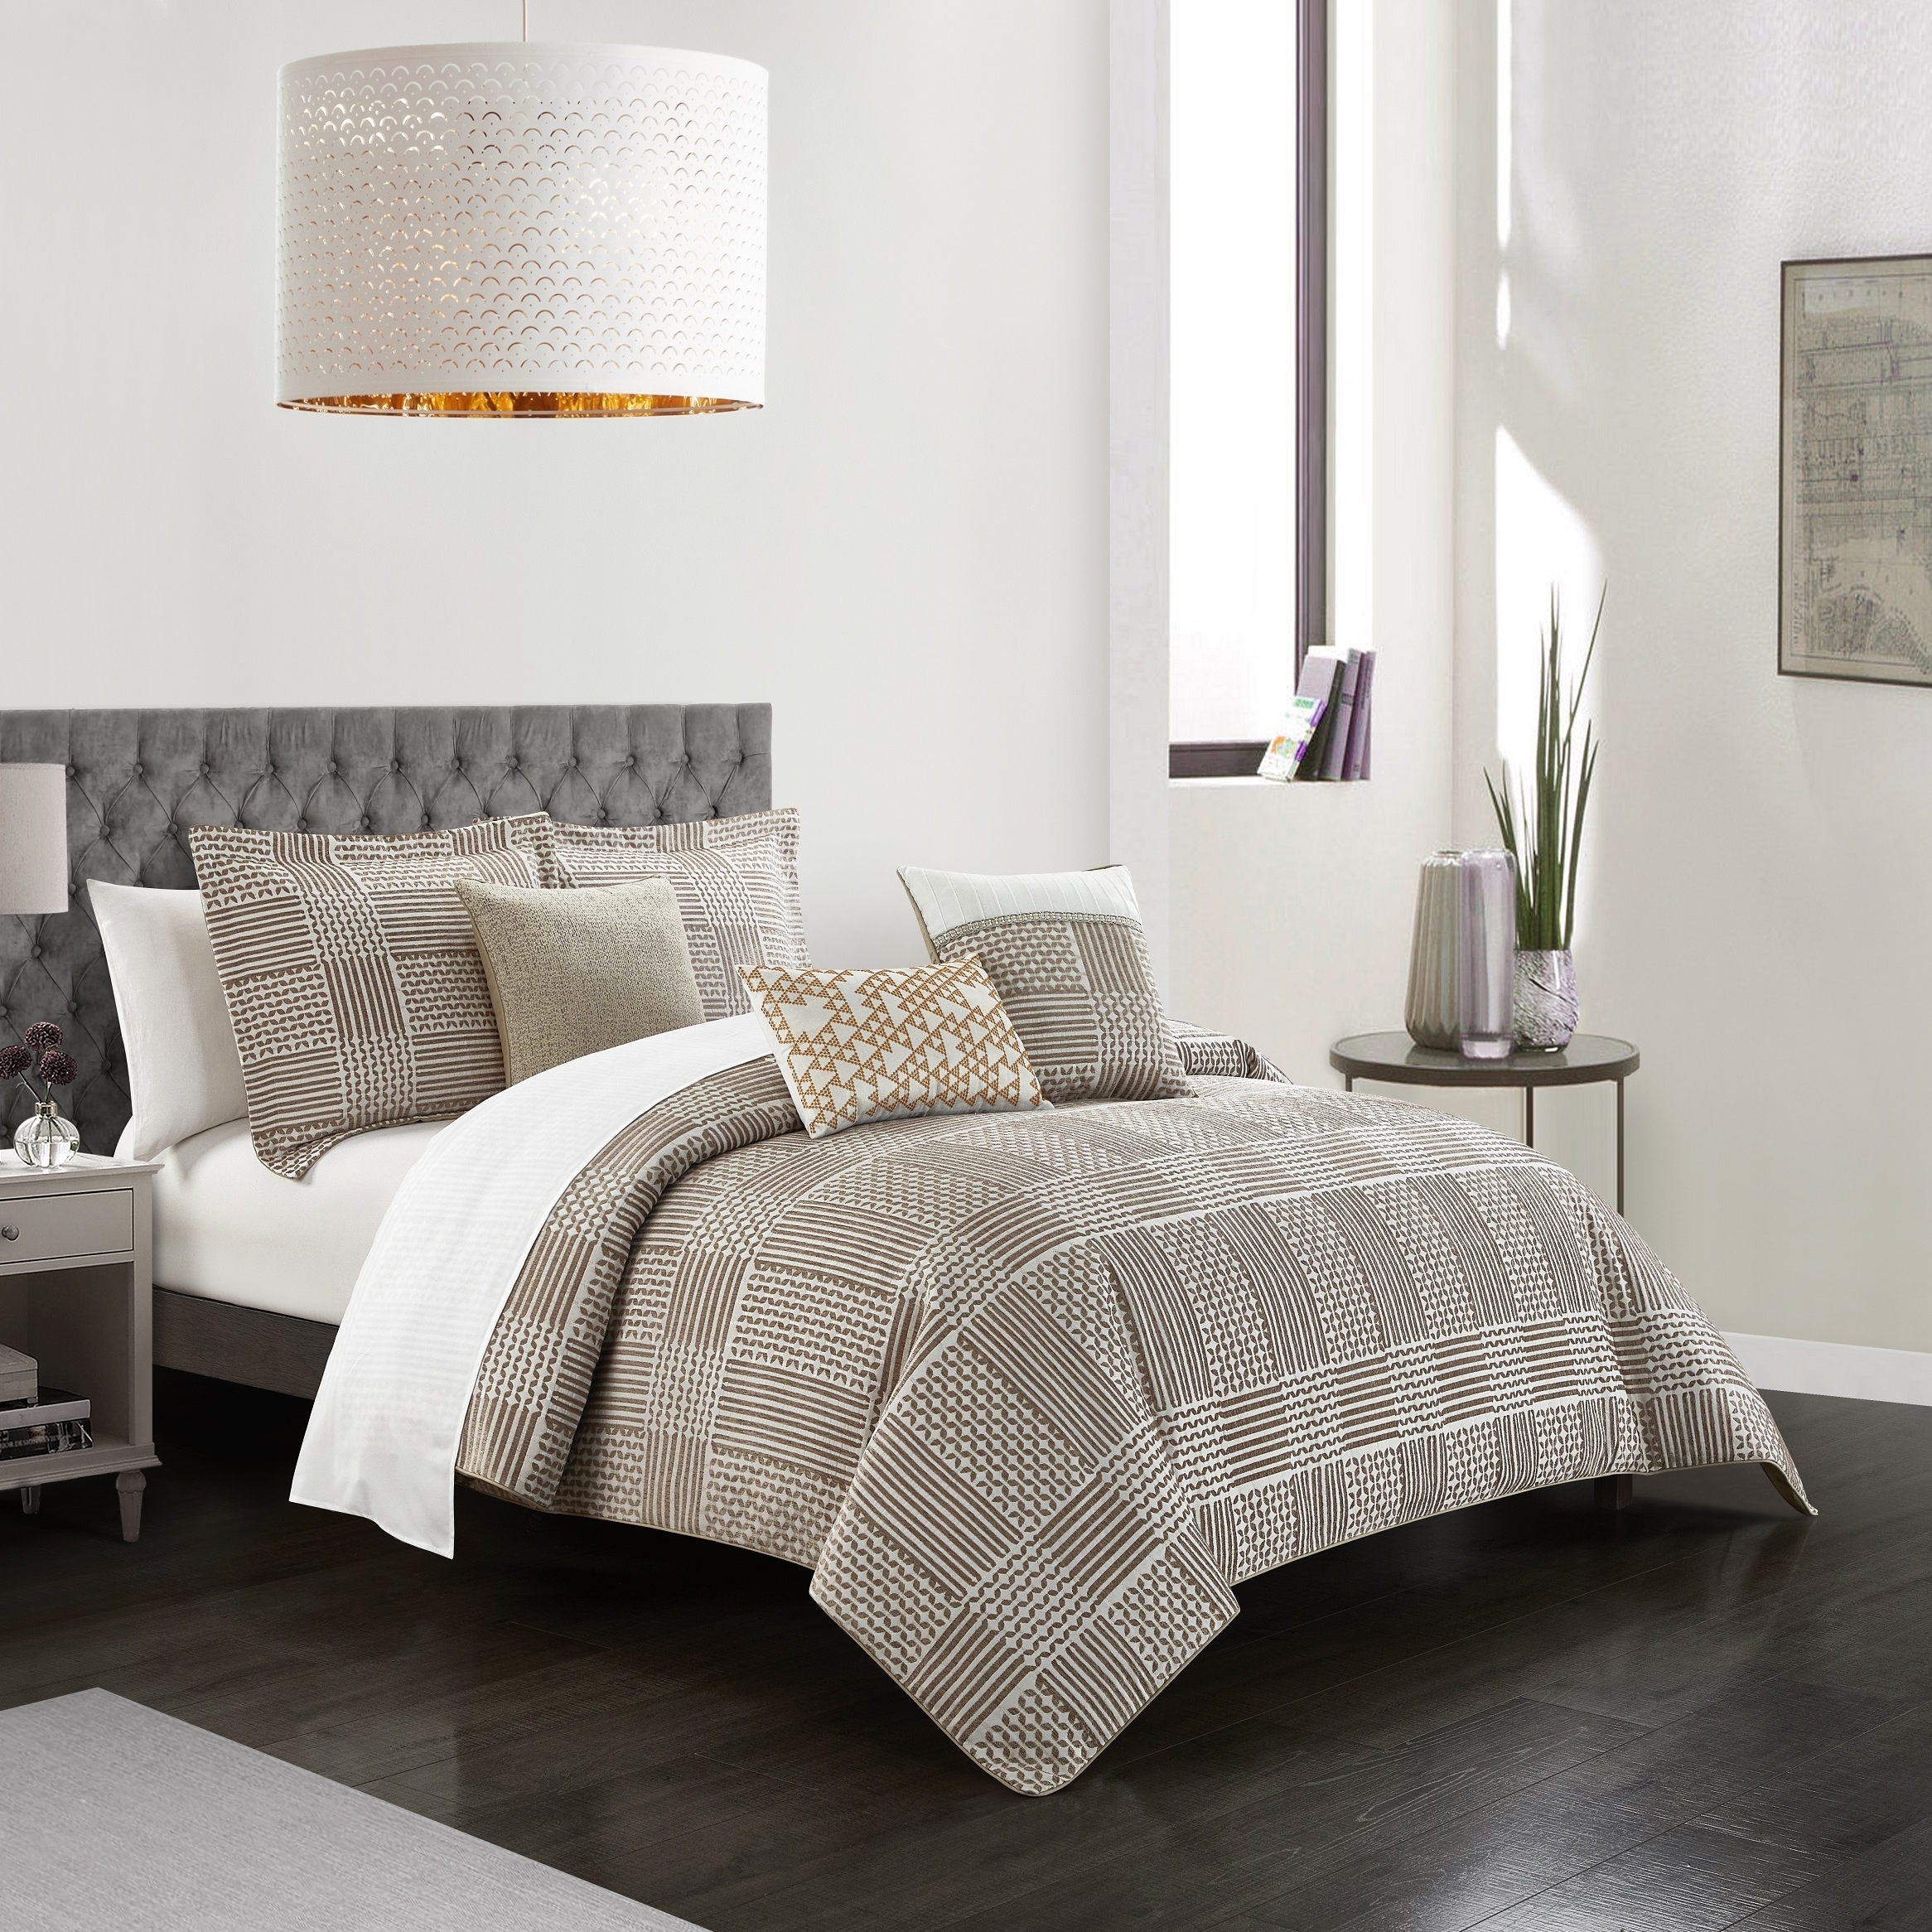 Odhi 6 Or 10 Piece Comforter Set Chenille Geometric Pattern Design Bedding - Beige With Sheet Set, Queen (10 Piece)